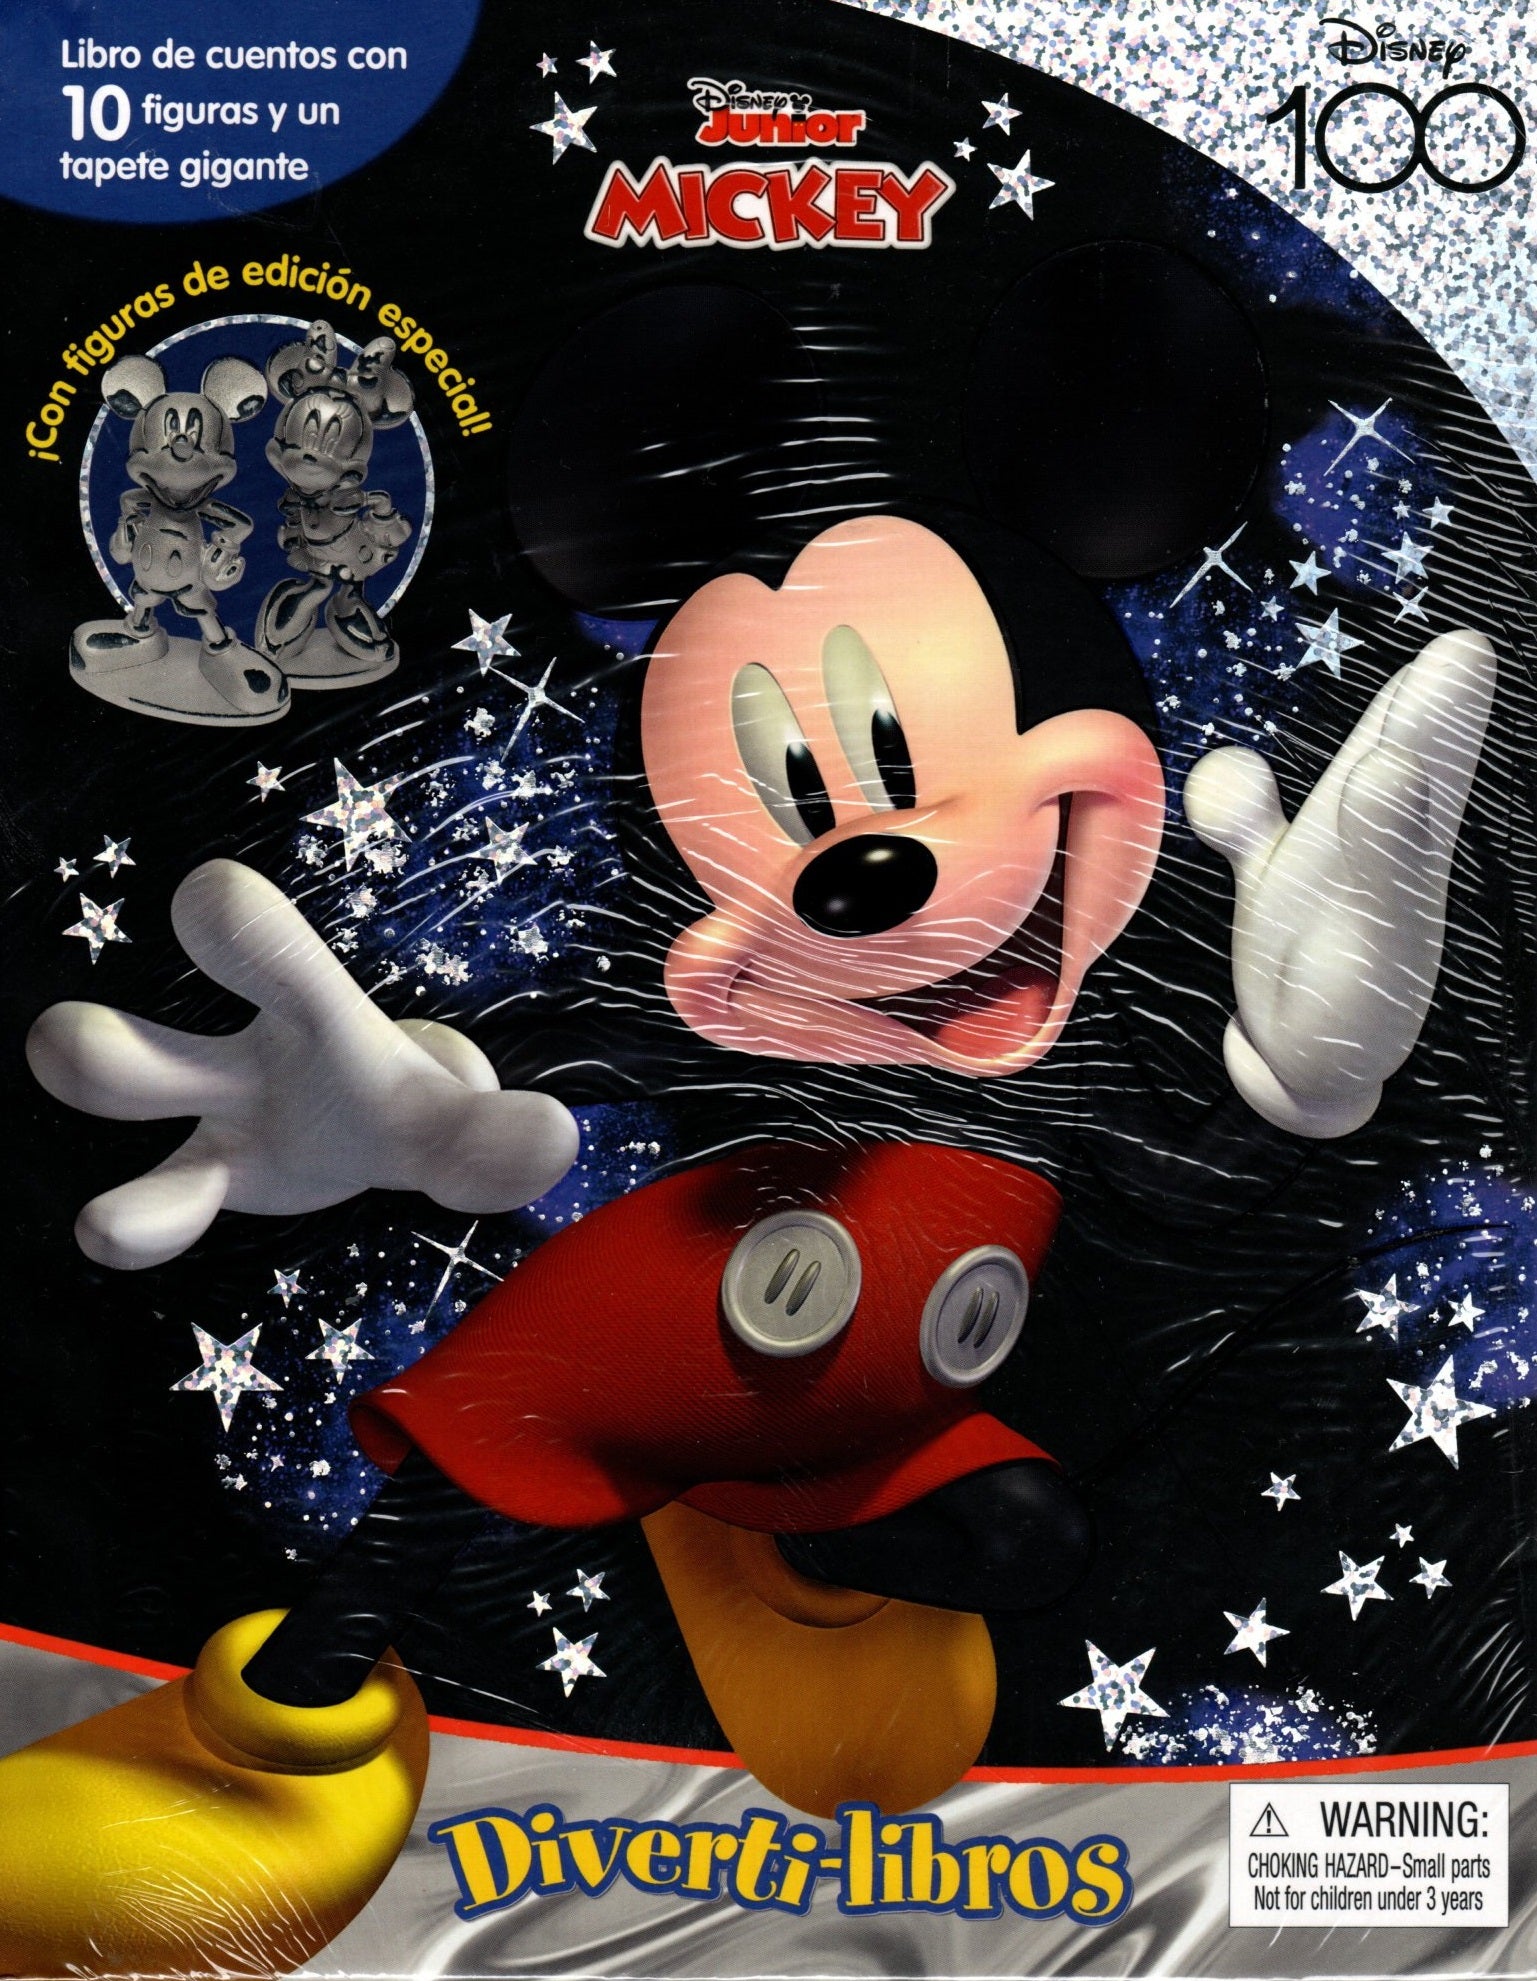 Libro Divertilibros Disney Mickey 100 con figuras de edición especial